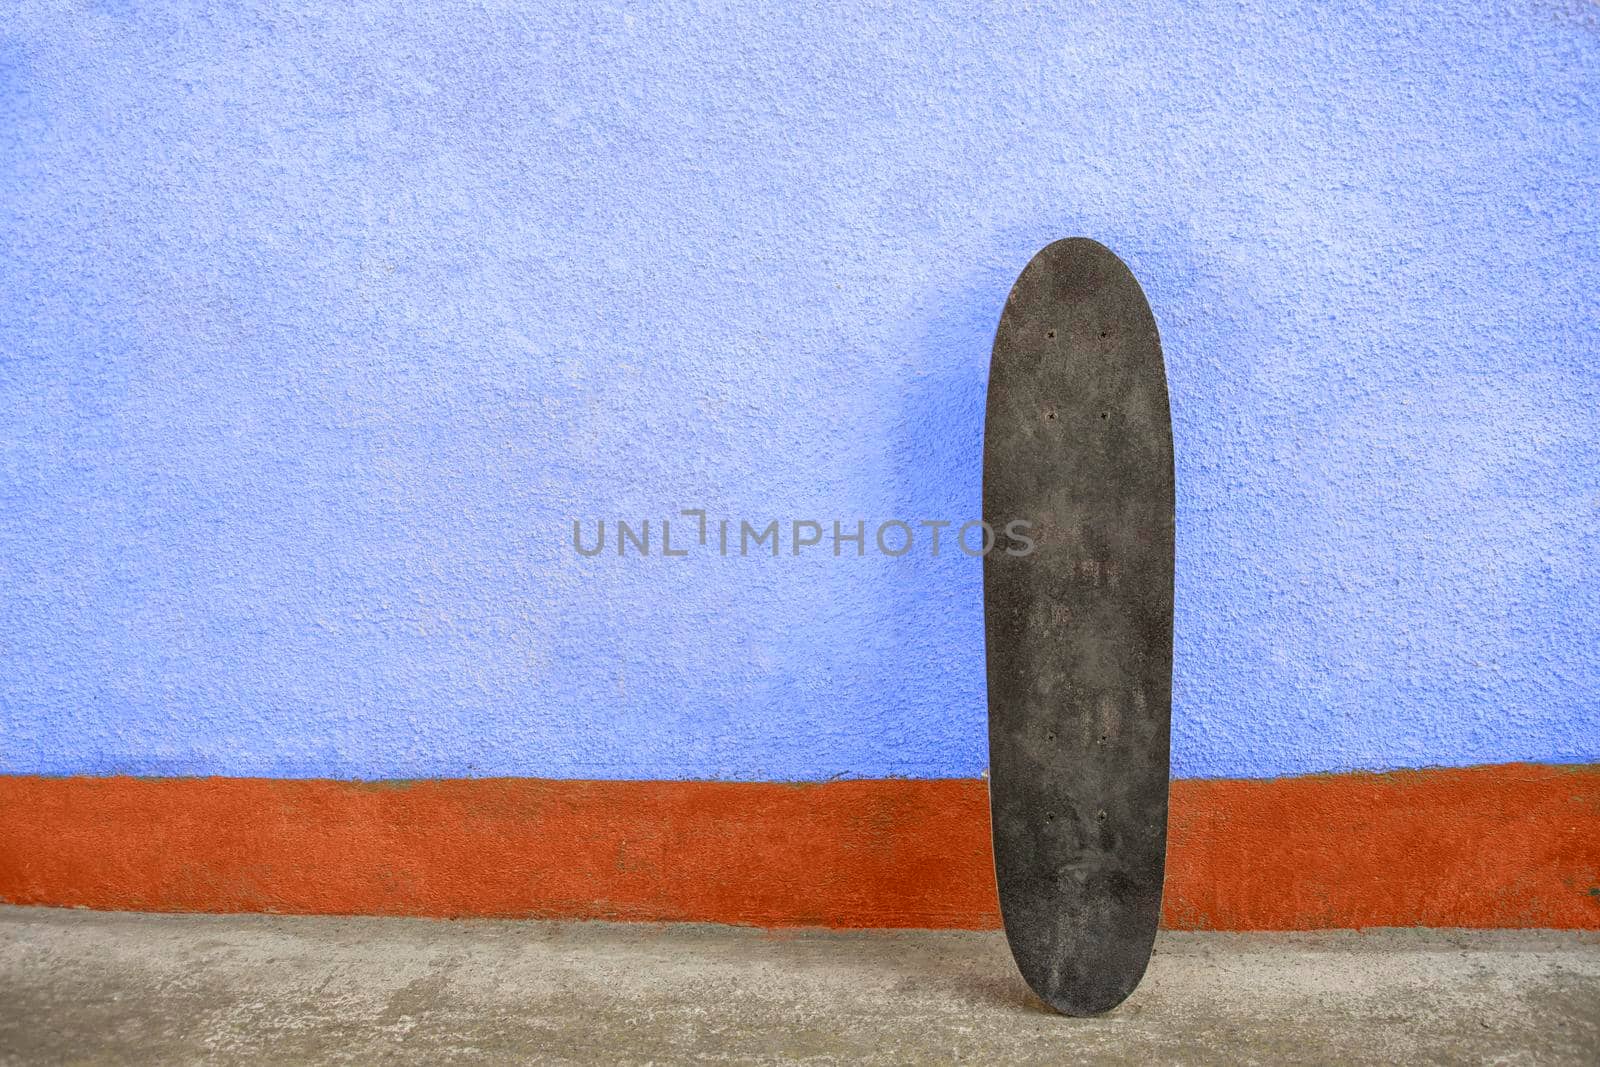 Skateboard on a wall. Used skateboard.